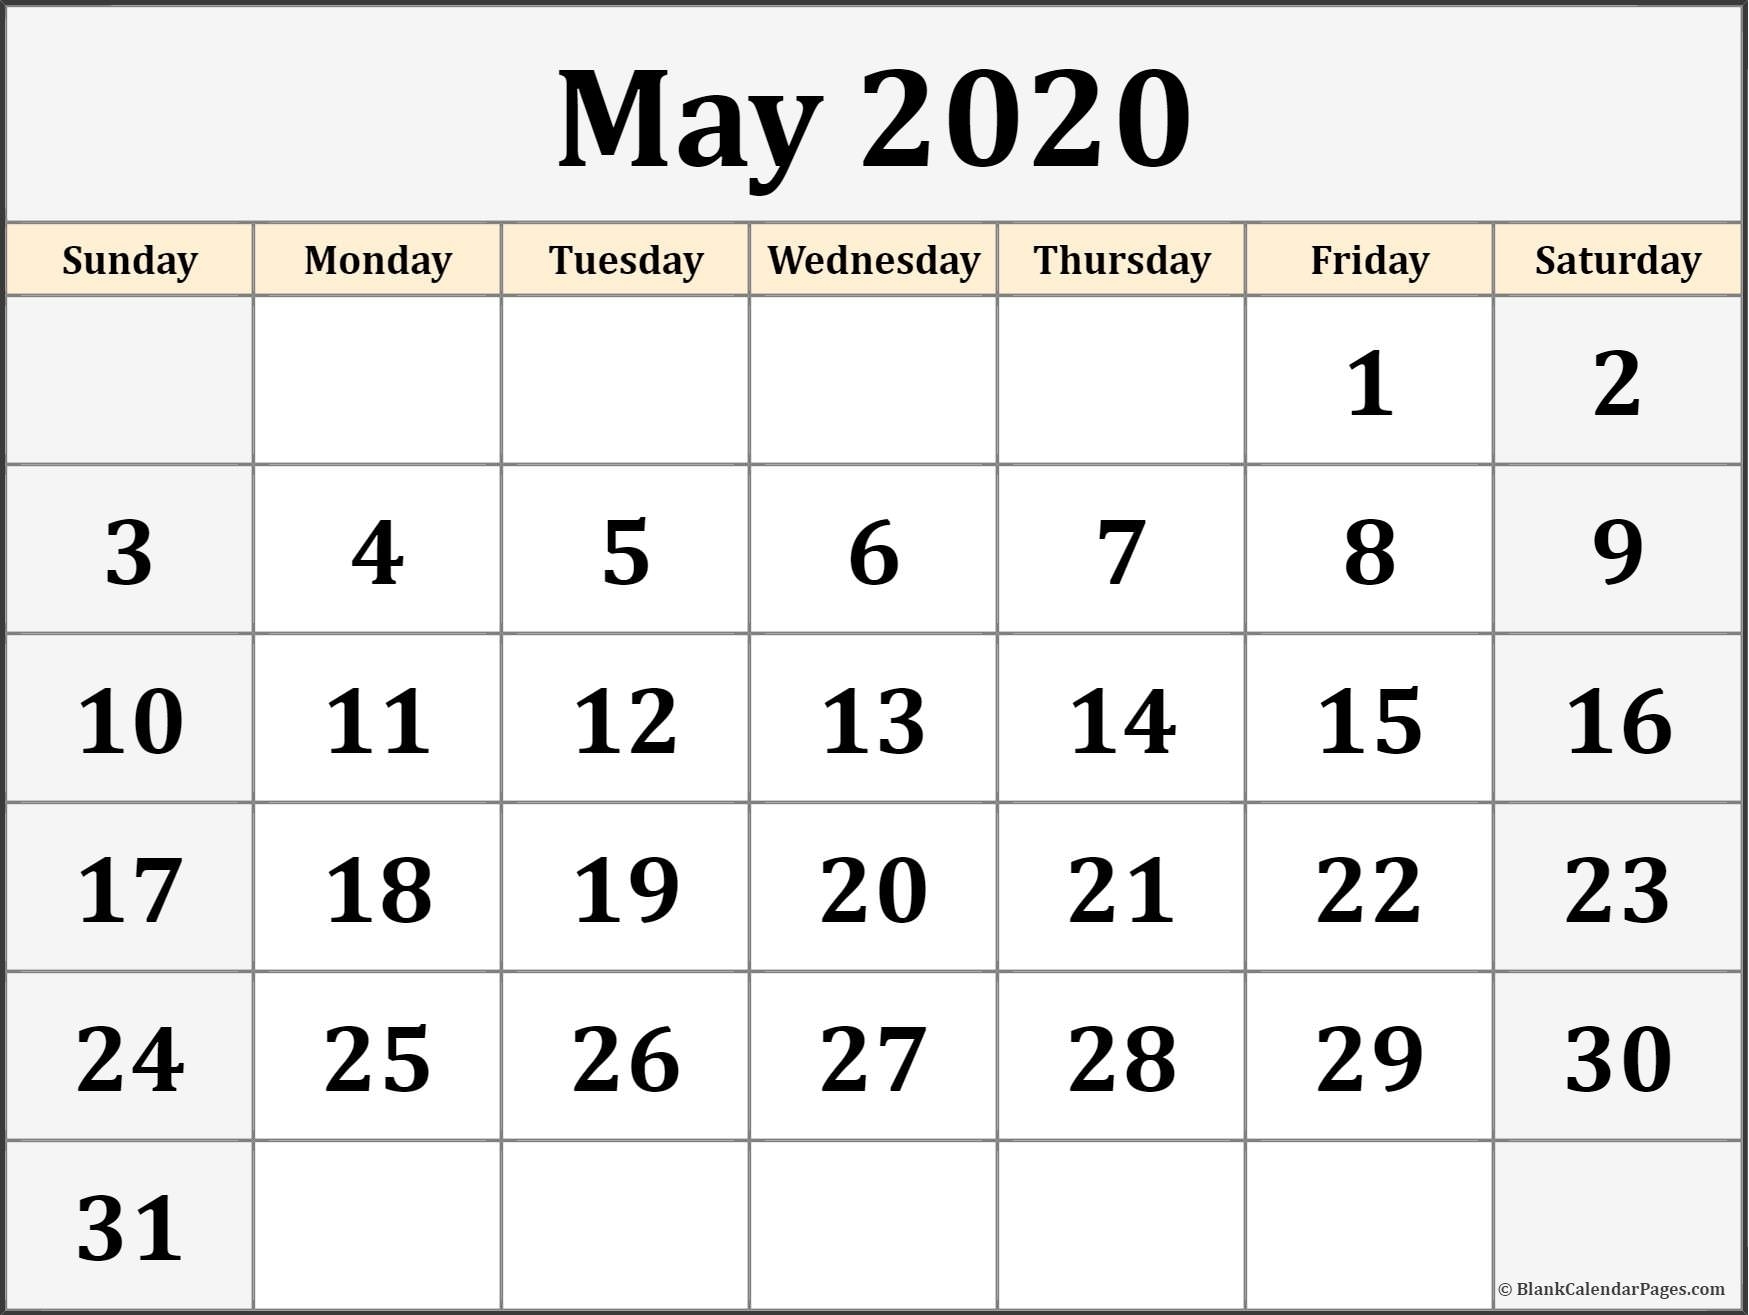 May 2020 Calendar | Free Printable Monthly Calendars